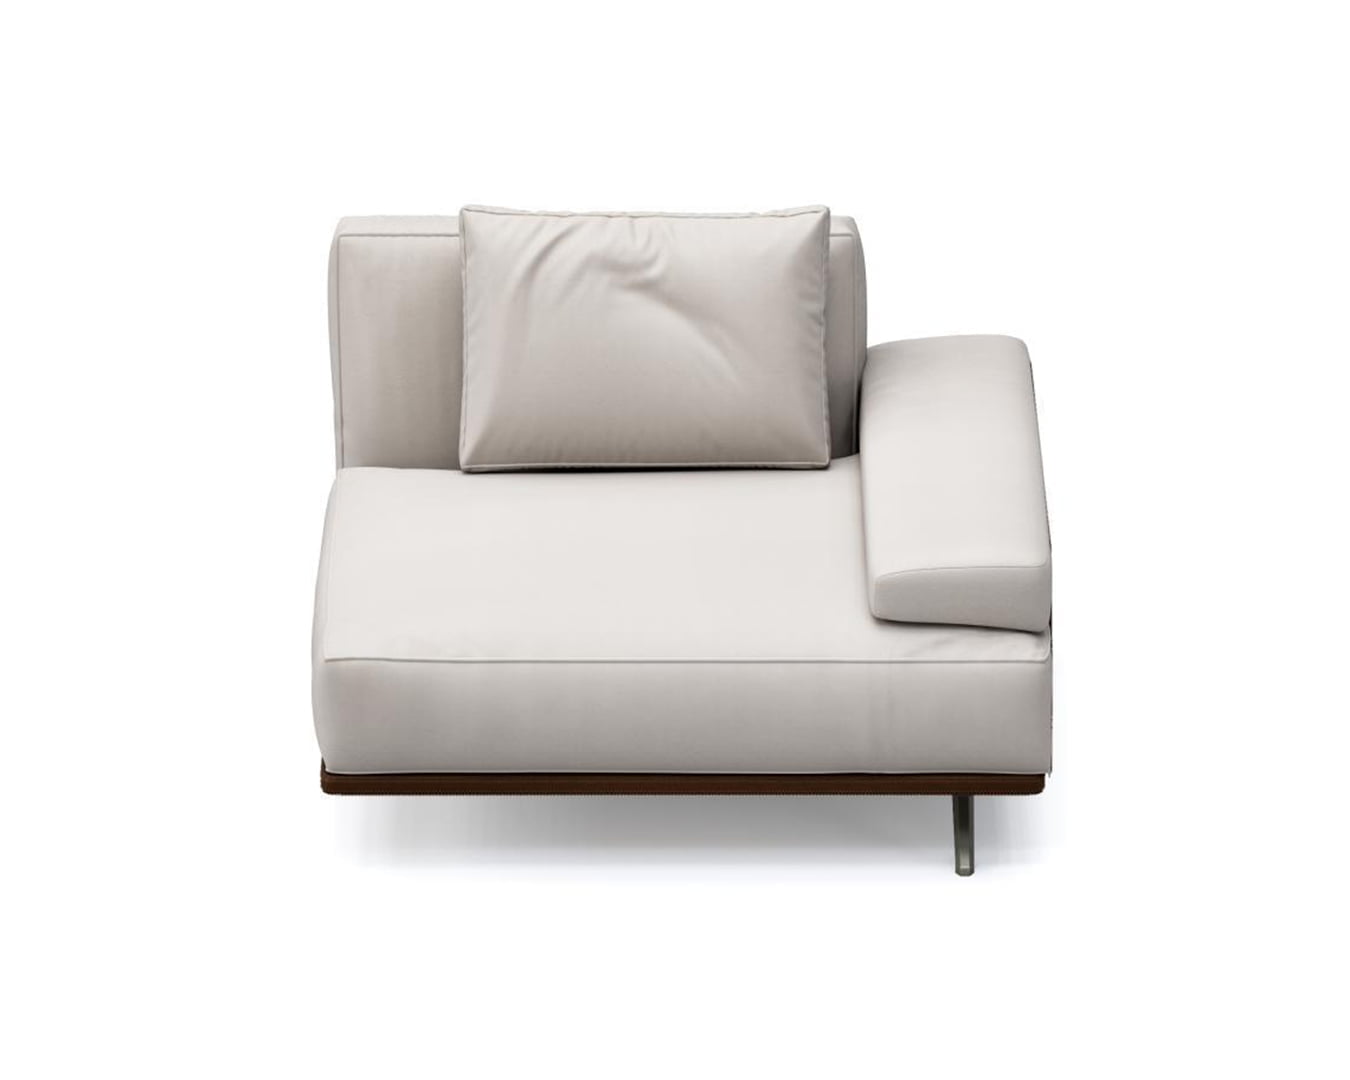 Modern Minimalis Sofa white and brown list single seat